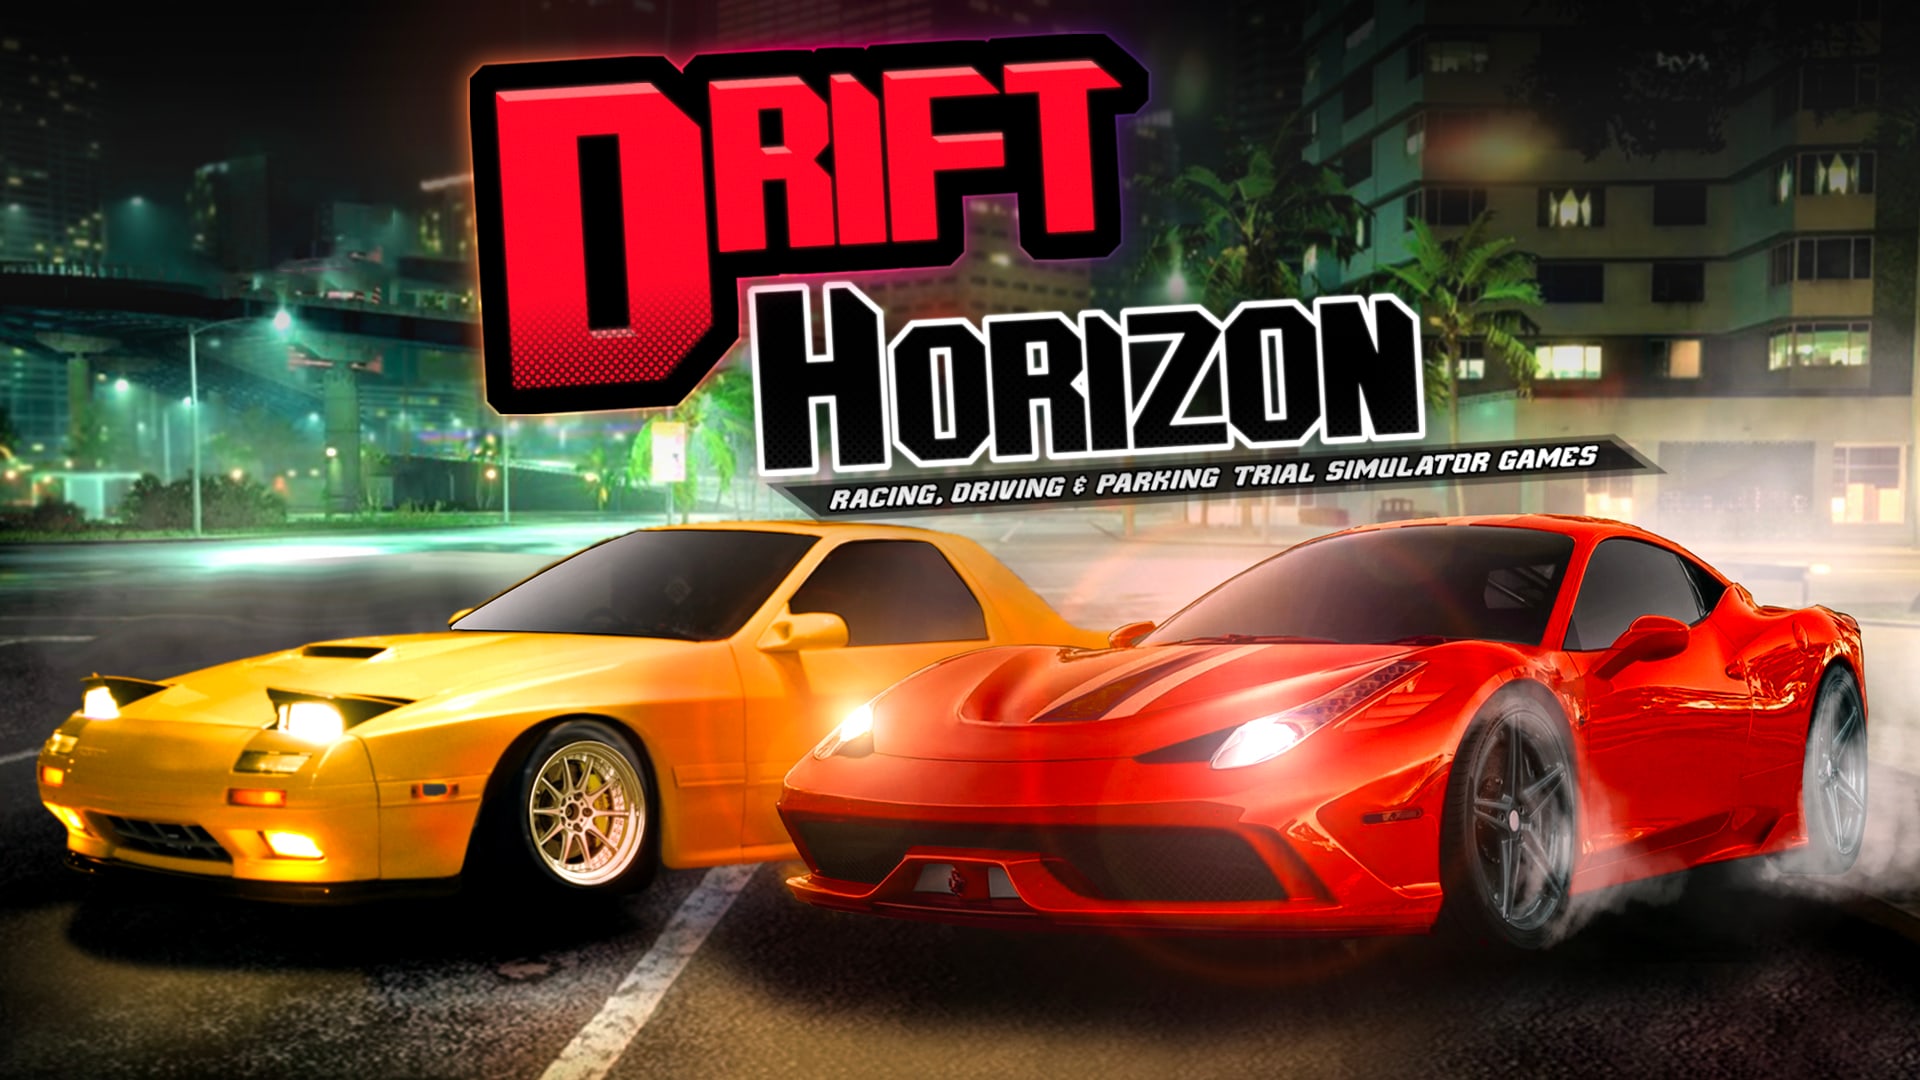 Drift Horizon Racing, Driving & Parking Trial Simulator Games  1